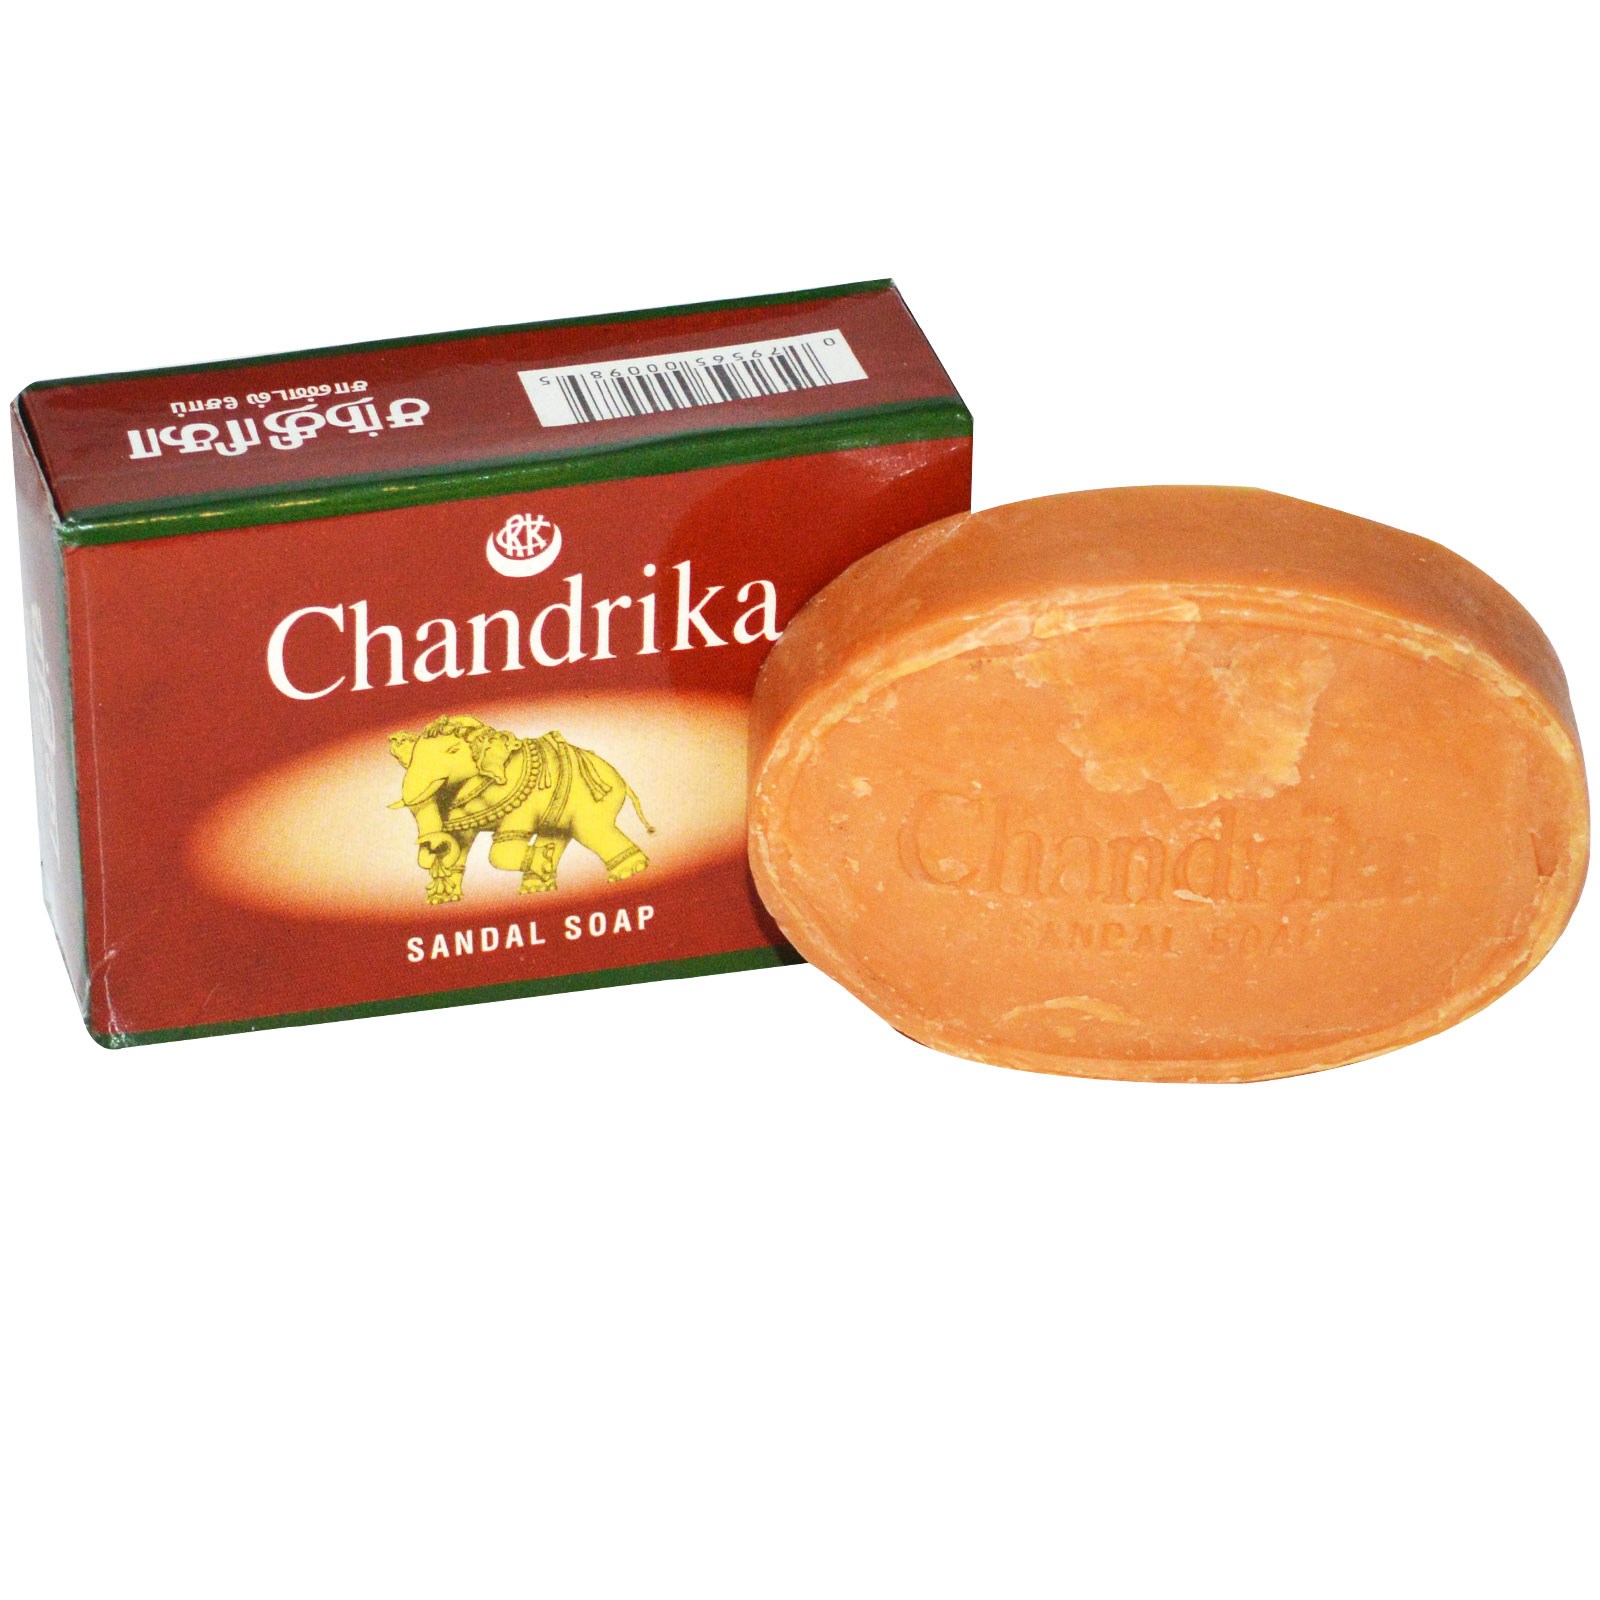 Chandrika Sandal Soap Photos Image And Wallpaper Mouthshut